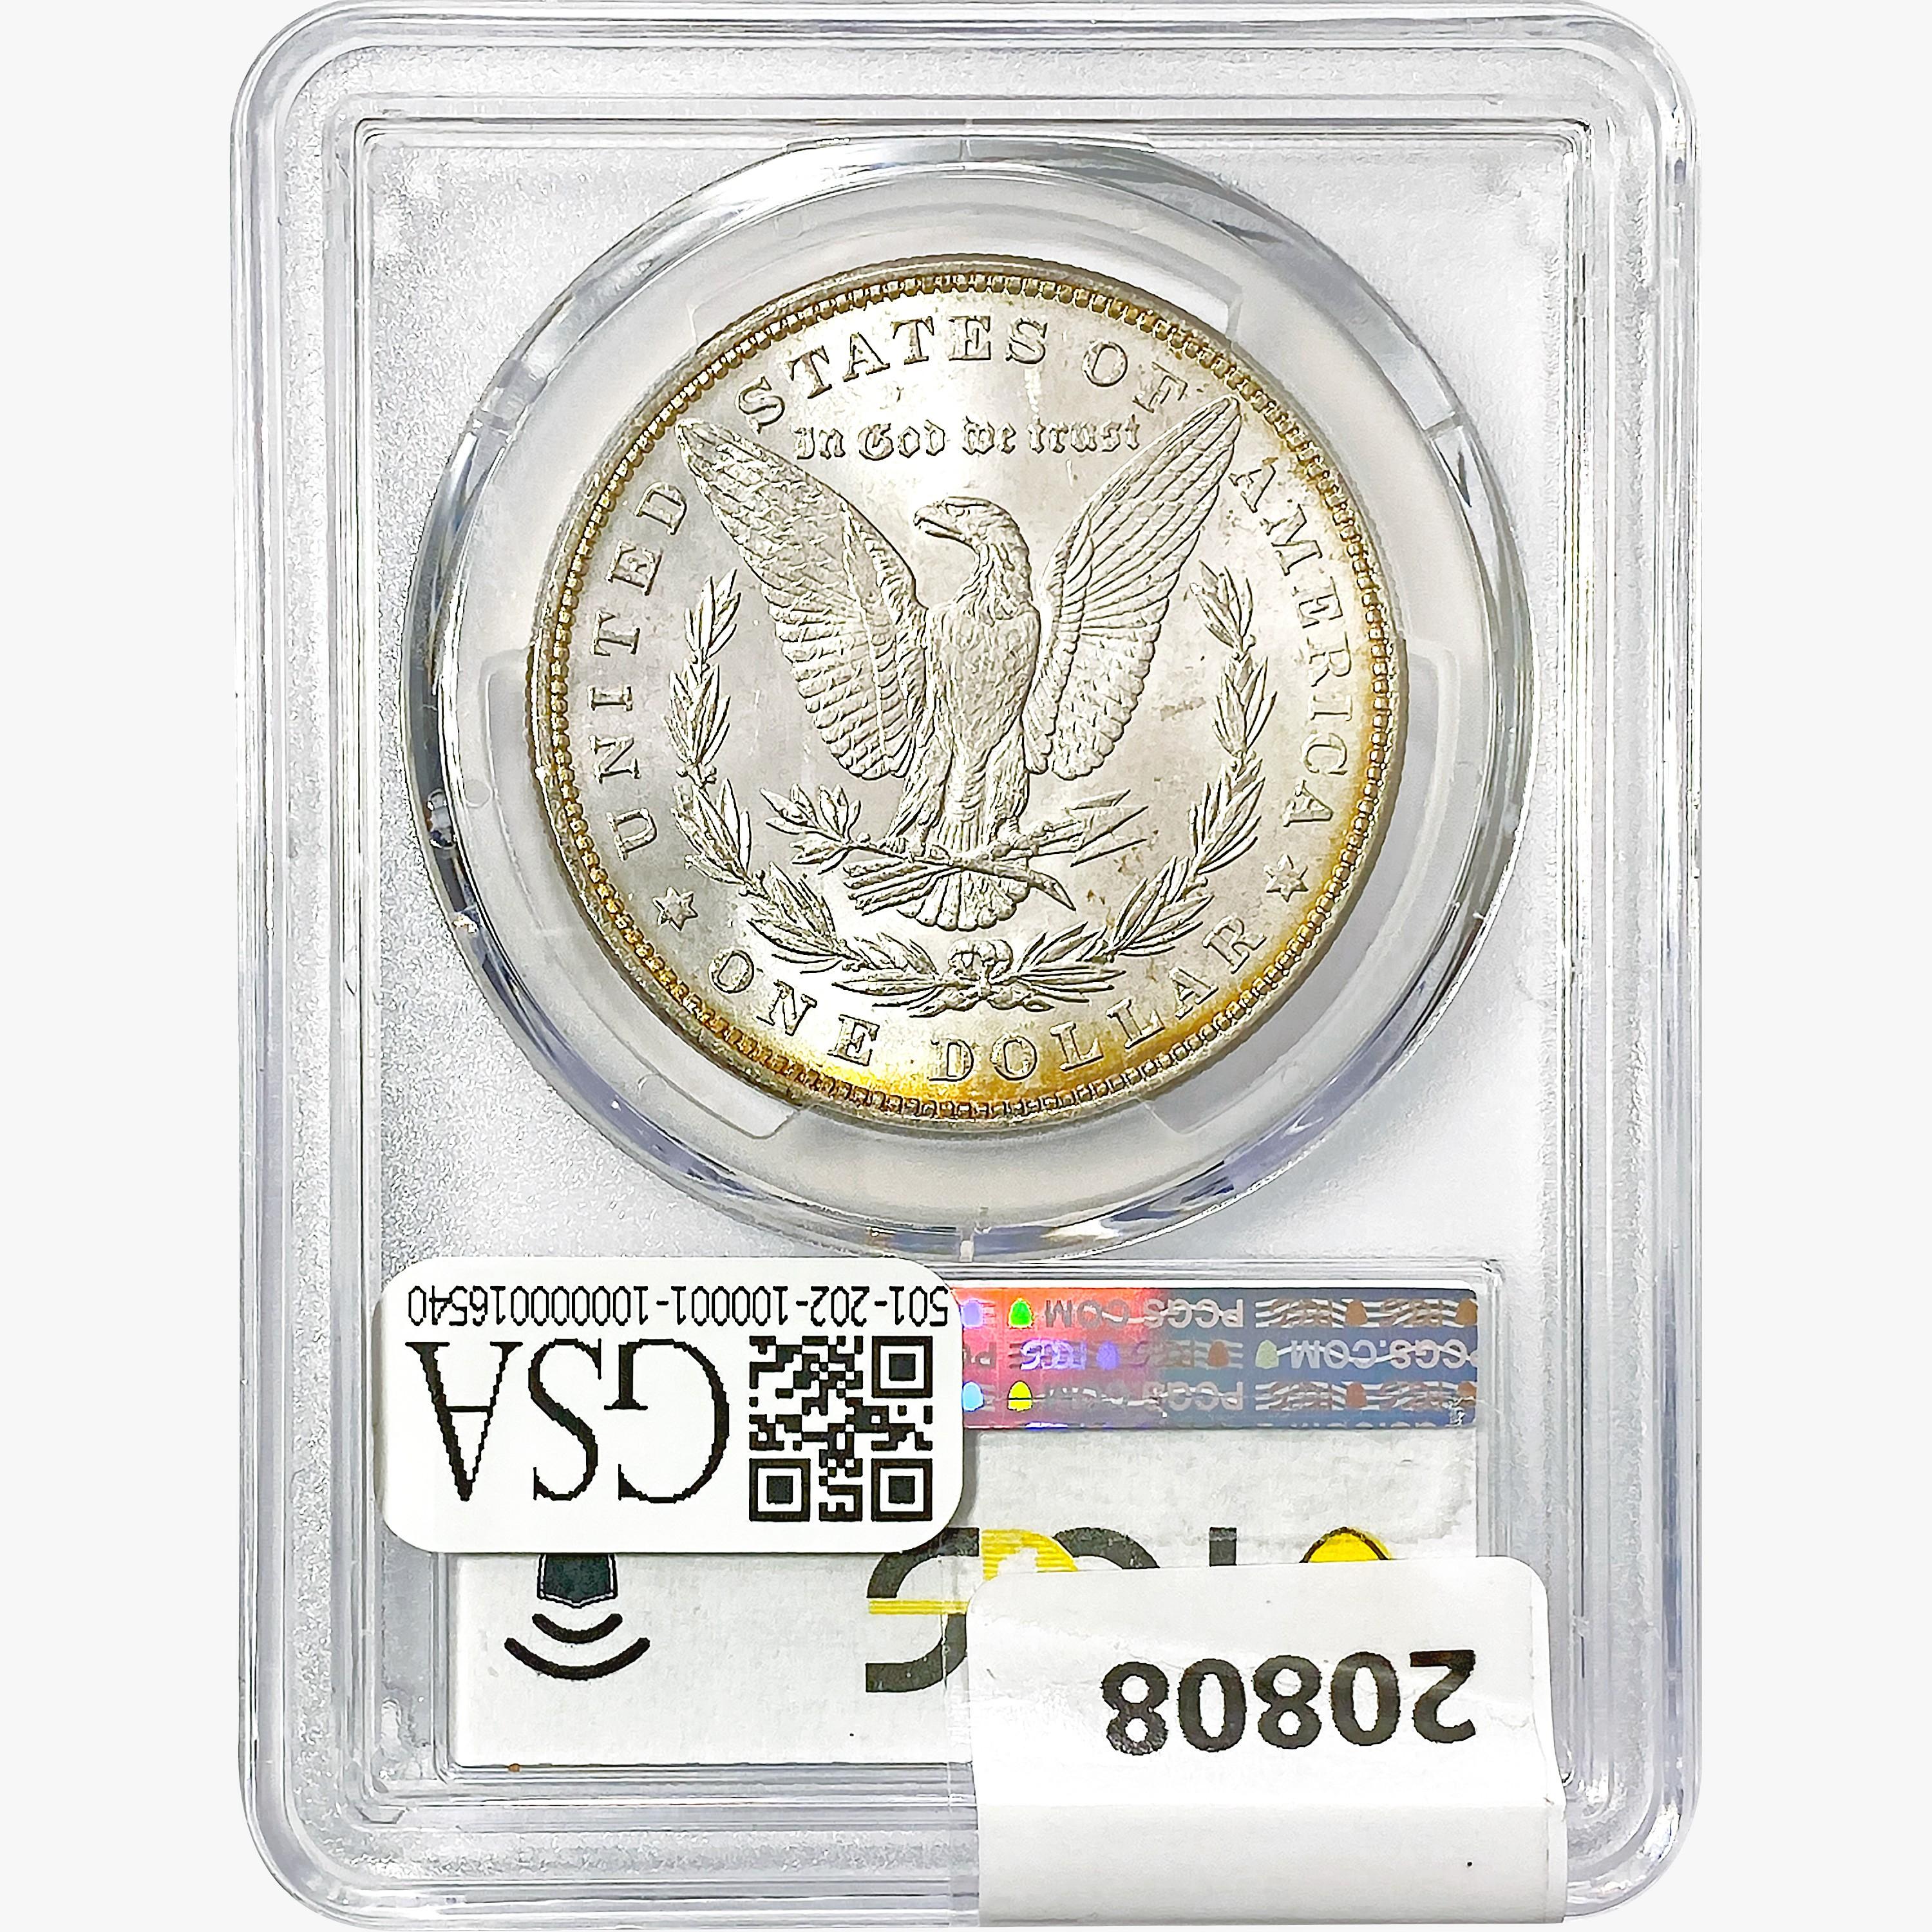 1880 Morgan Silver Dollar PCGS MS63